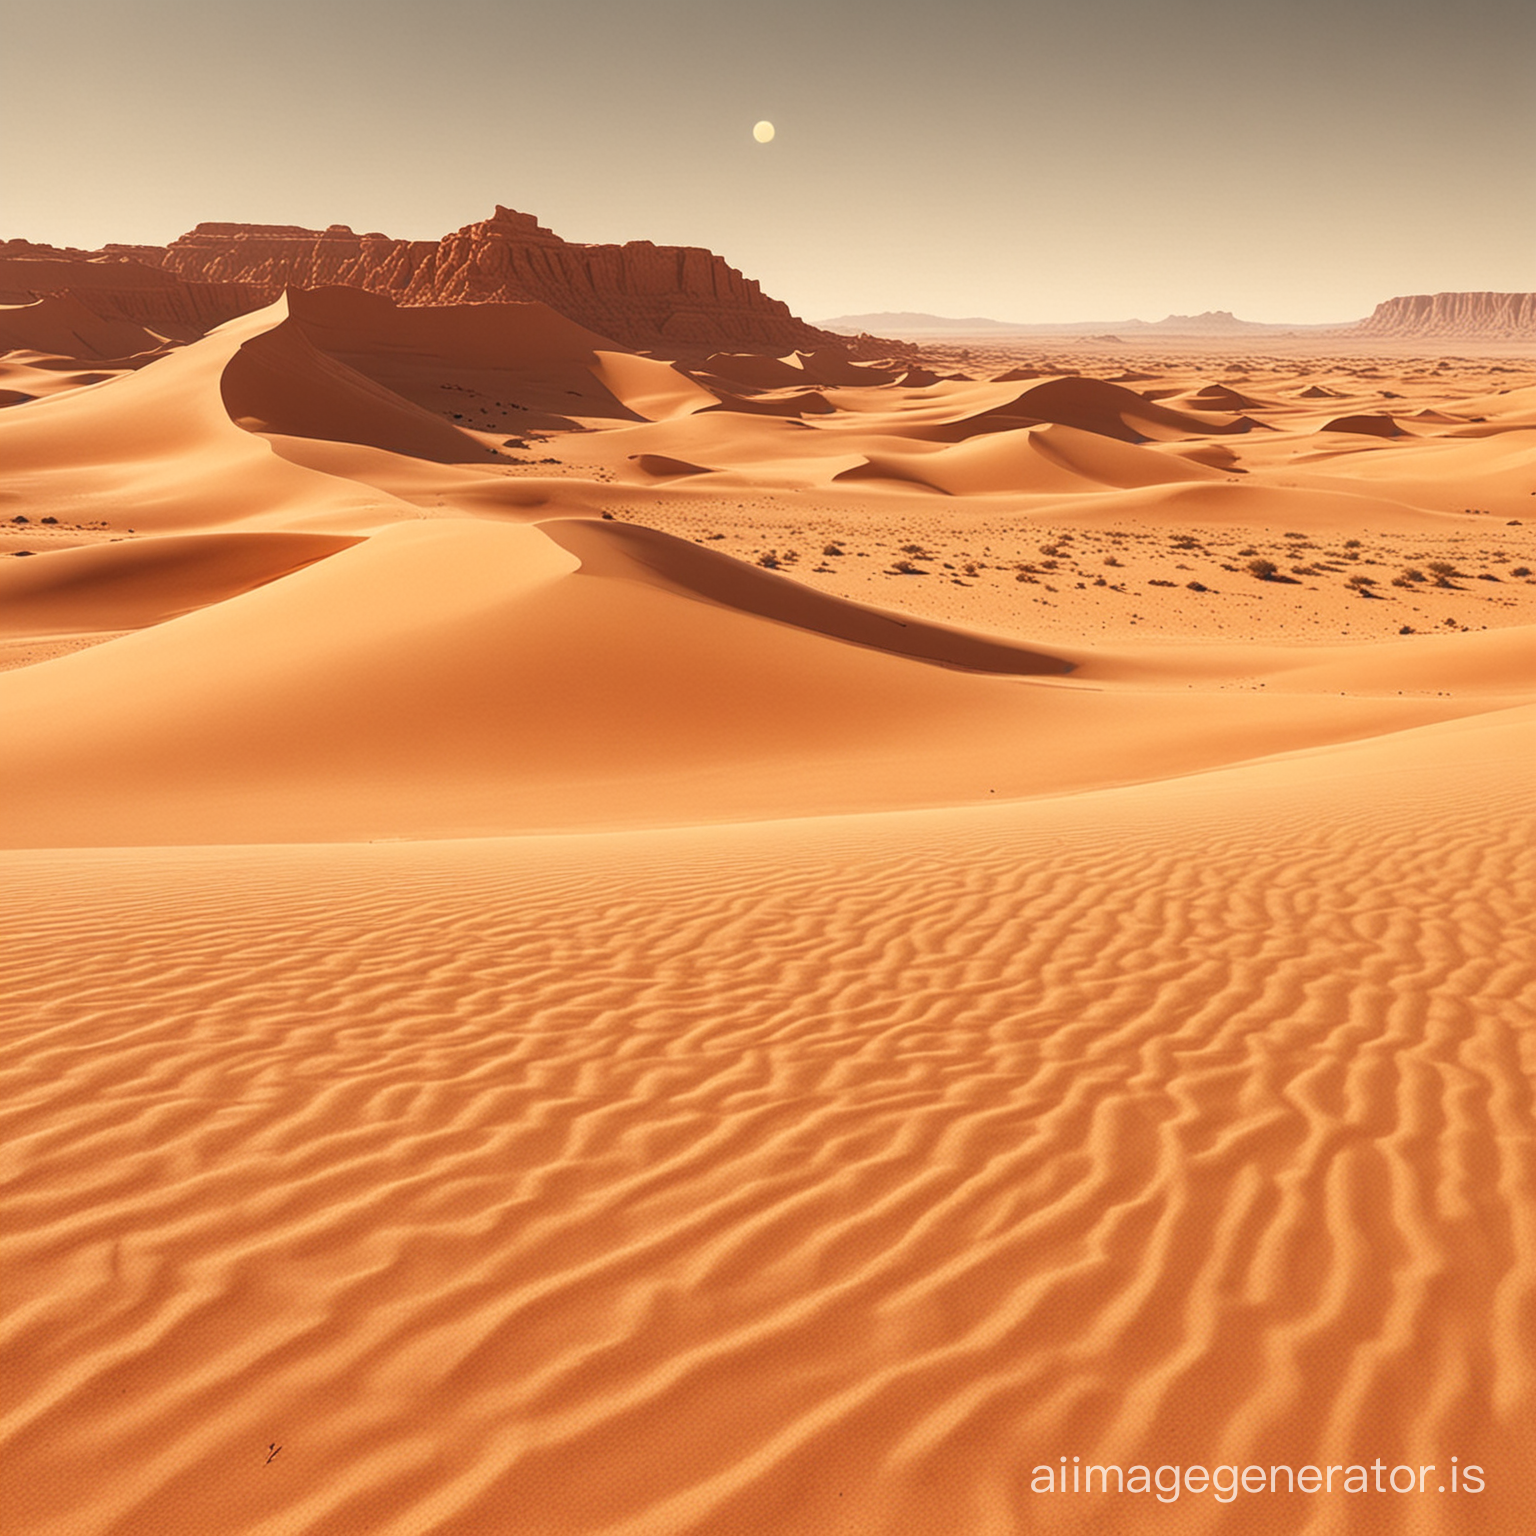 creat a image of the sahara desert in cartoon
